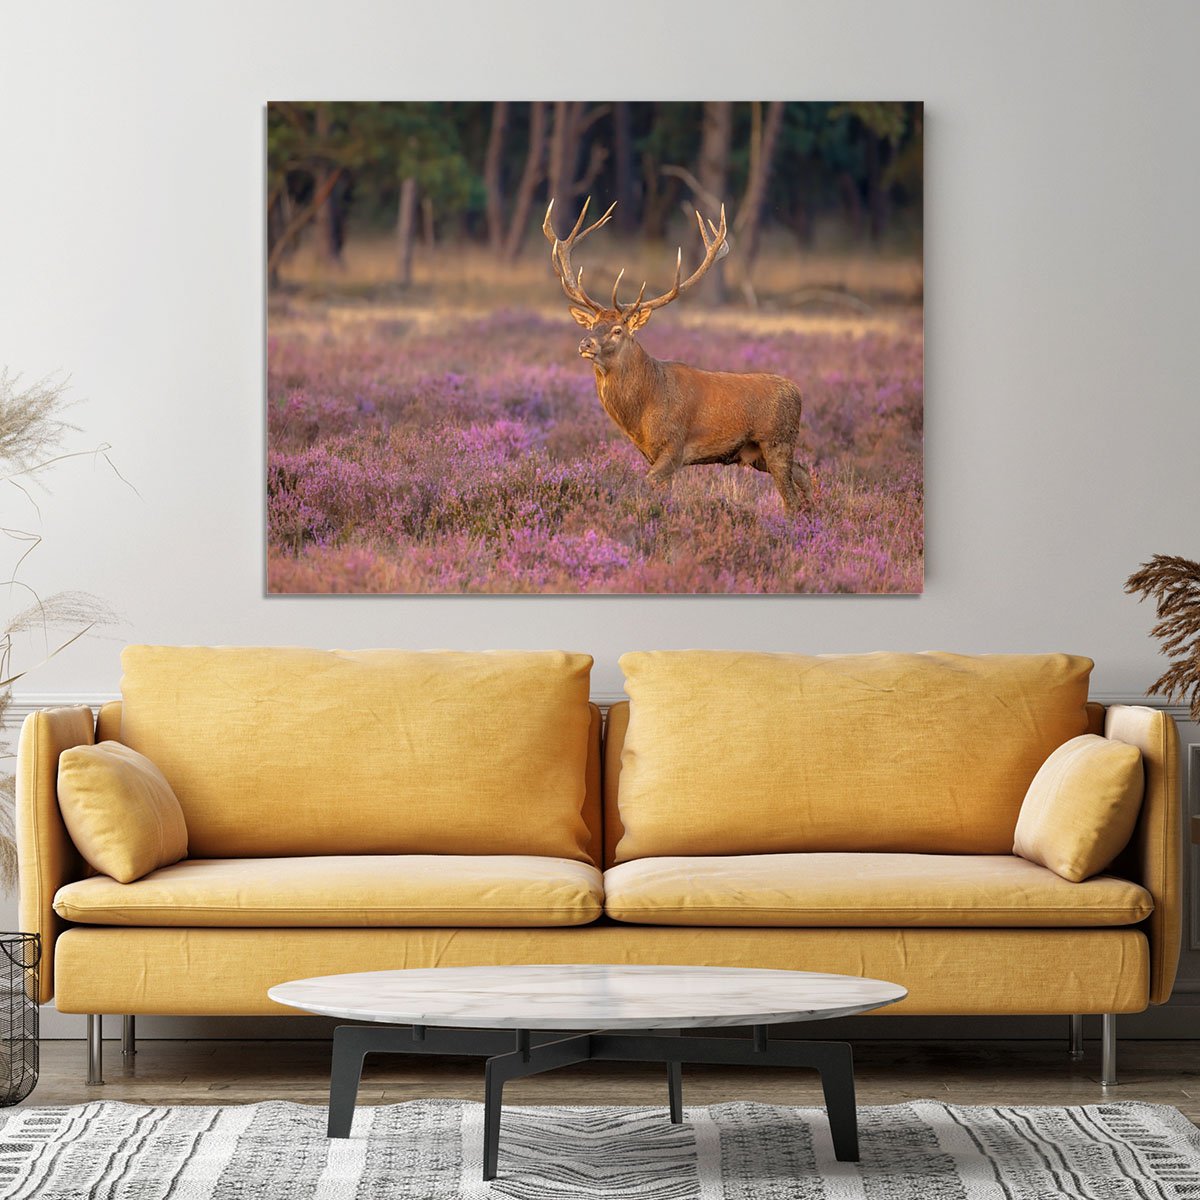 Male red deer Cervus elaphus with antlers during mating season Canvas Print or Poster